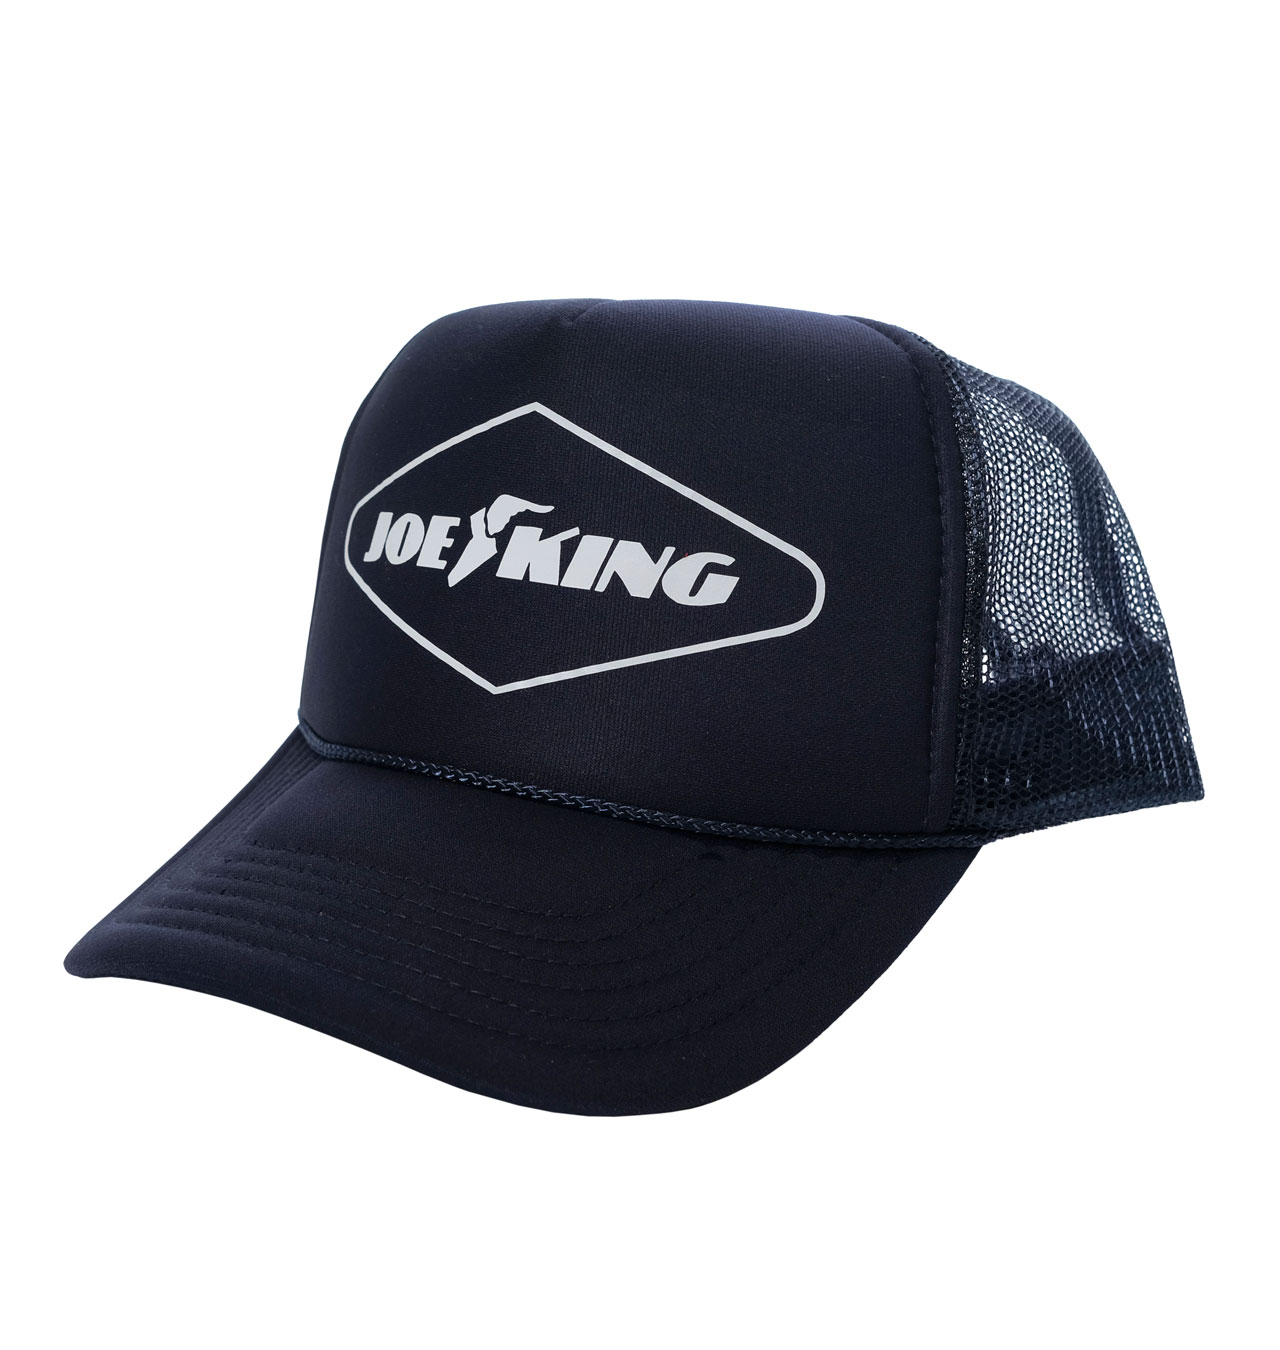 Joe King - JK Vintage Racing Mesh Cap - Navy